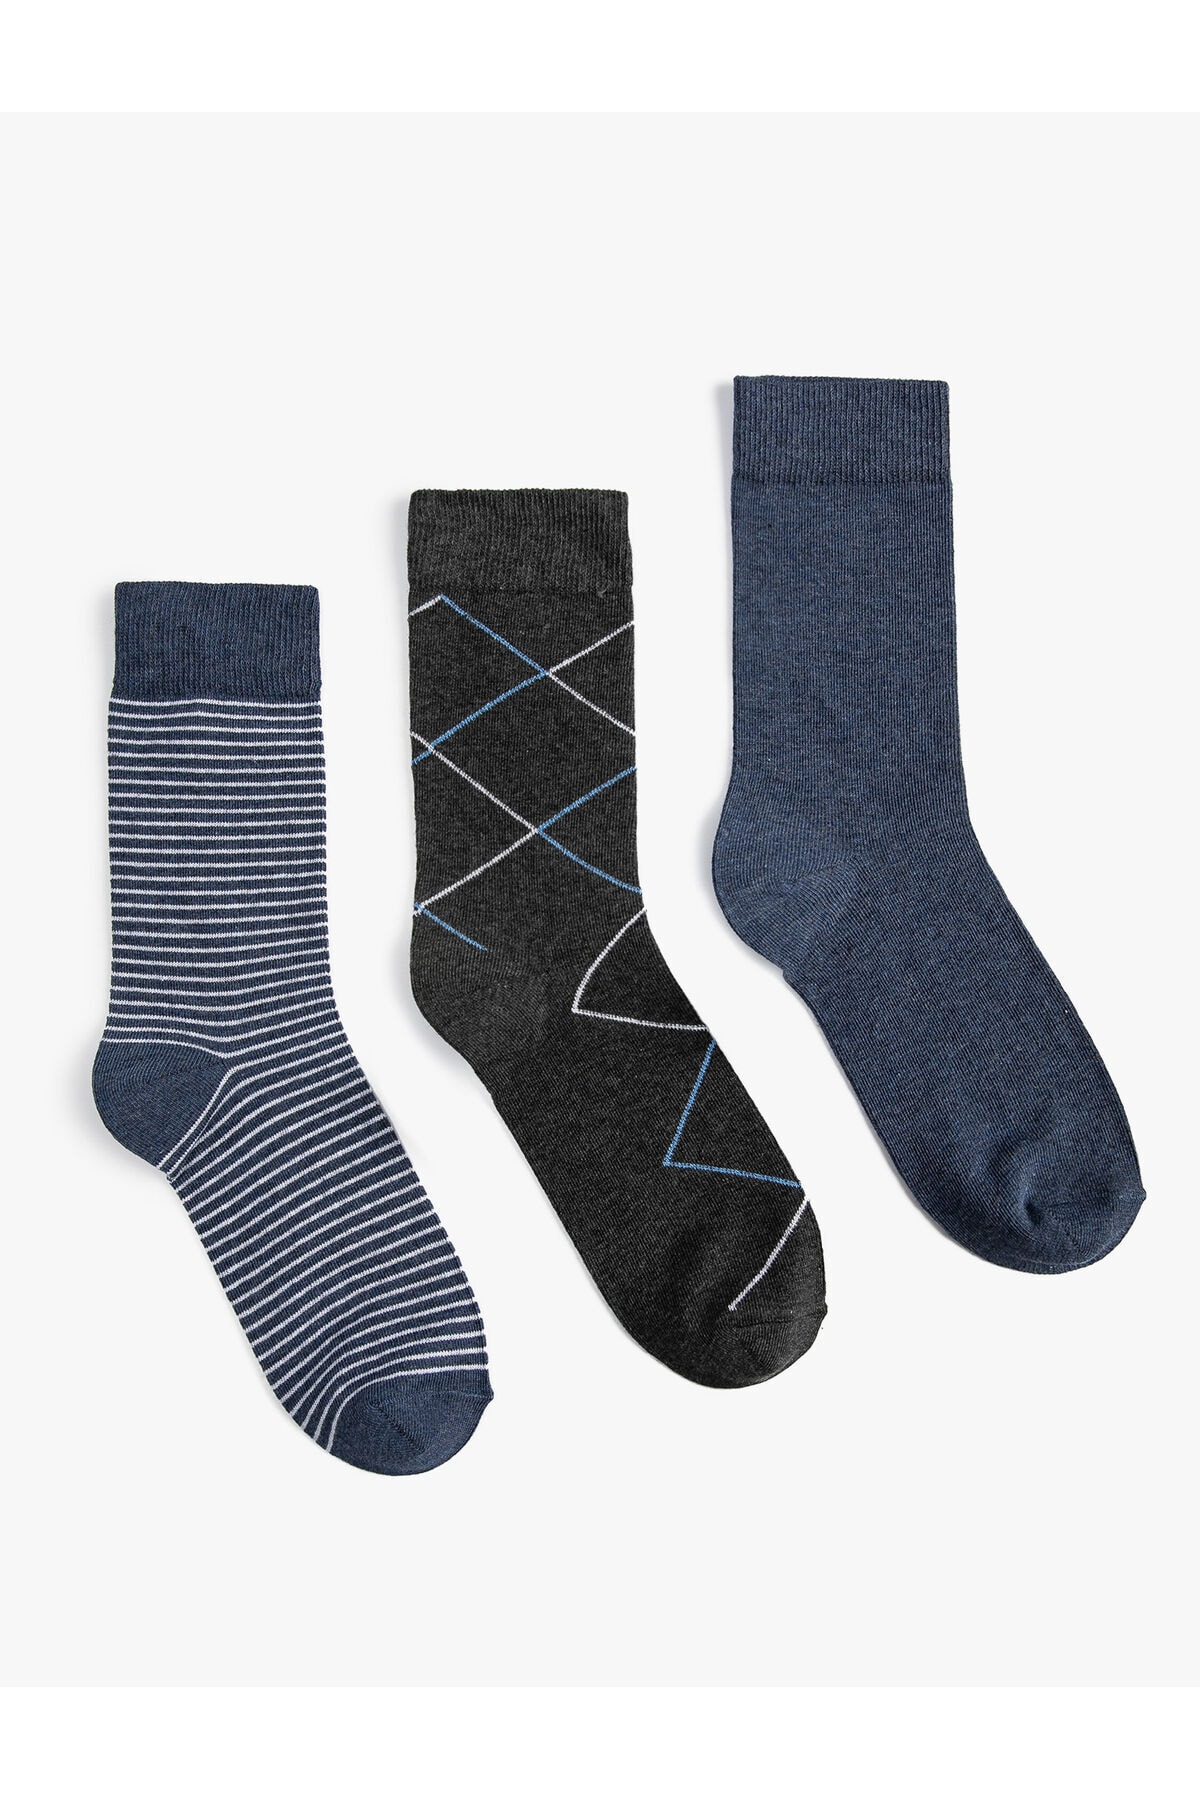 Koton 3-Piece Socks Set Multicolored Geometric Pattern